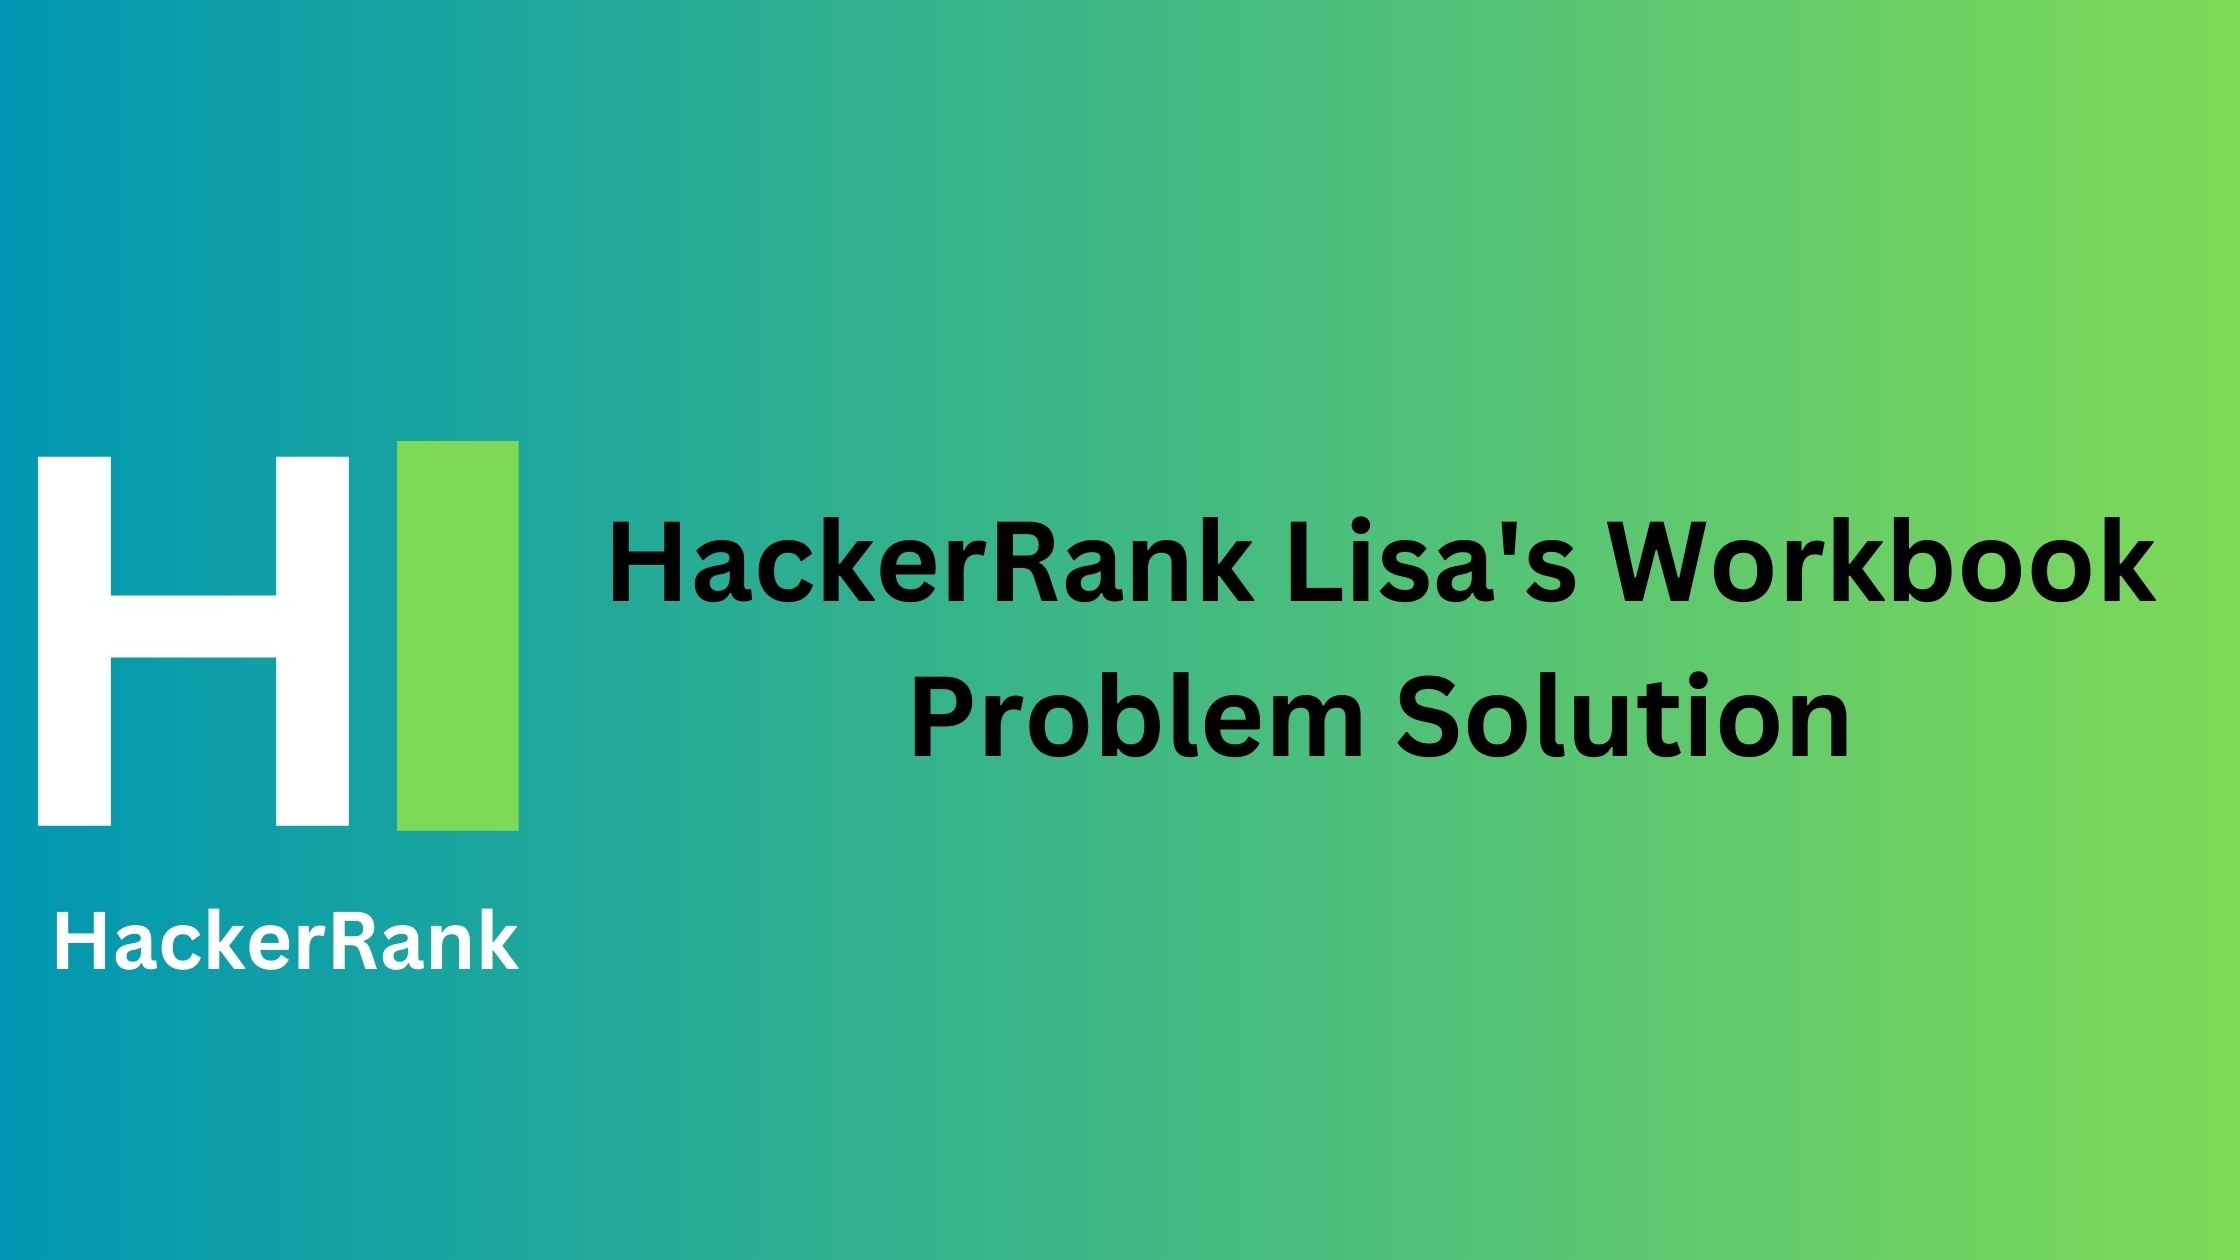 HackerRank Quicksort 1 - Partition Problem Solution